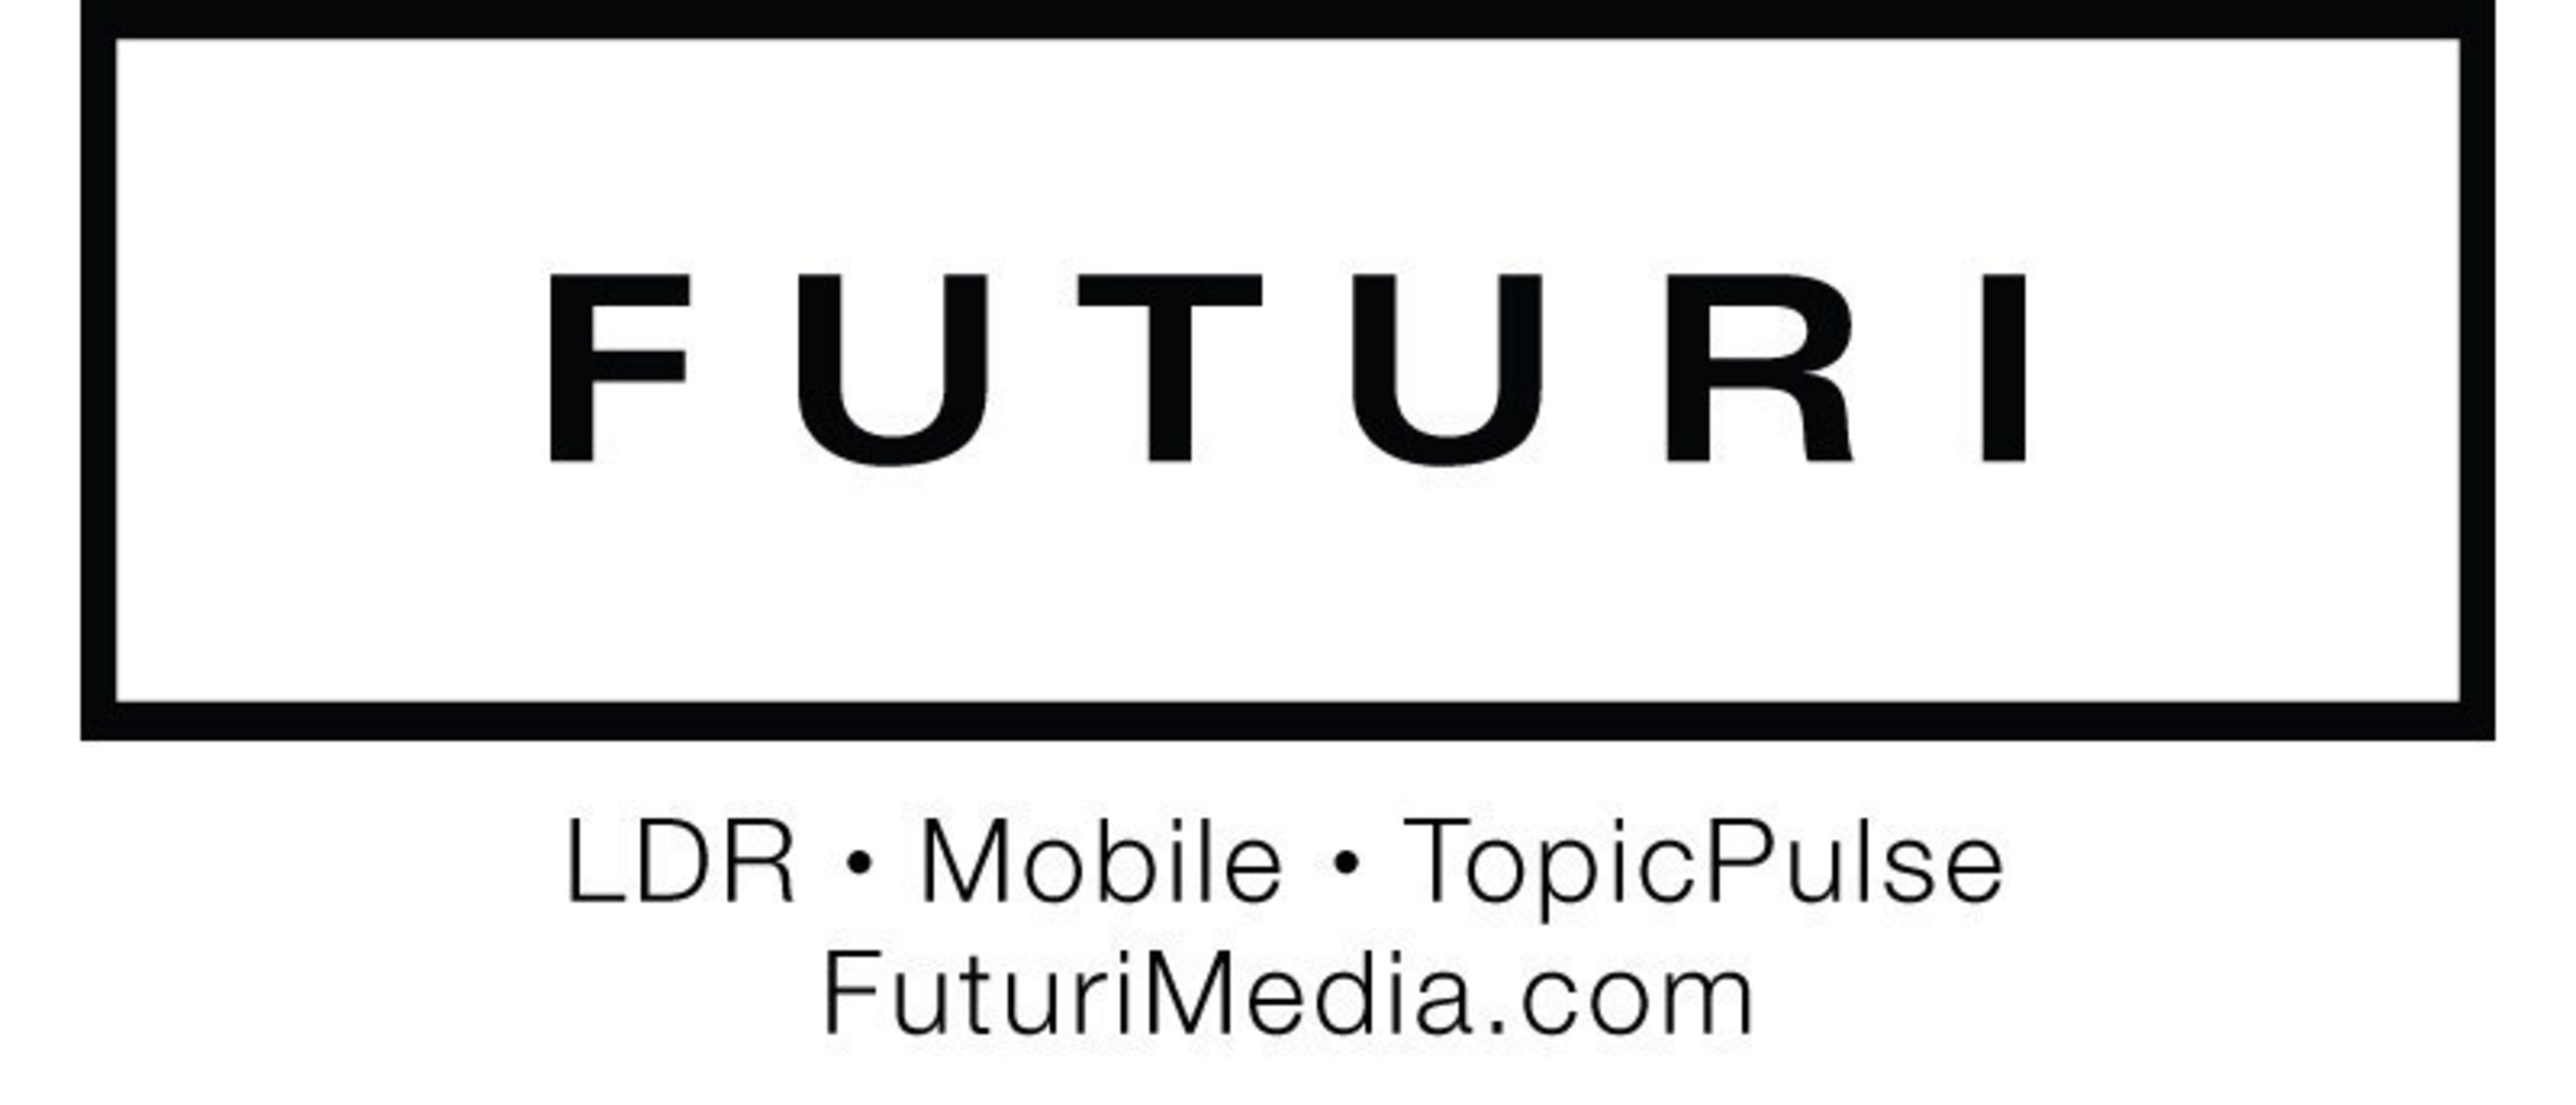 Futuri Media Logo